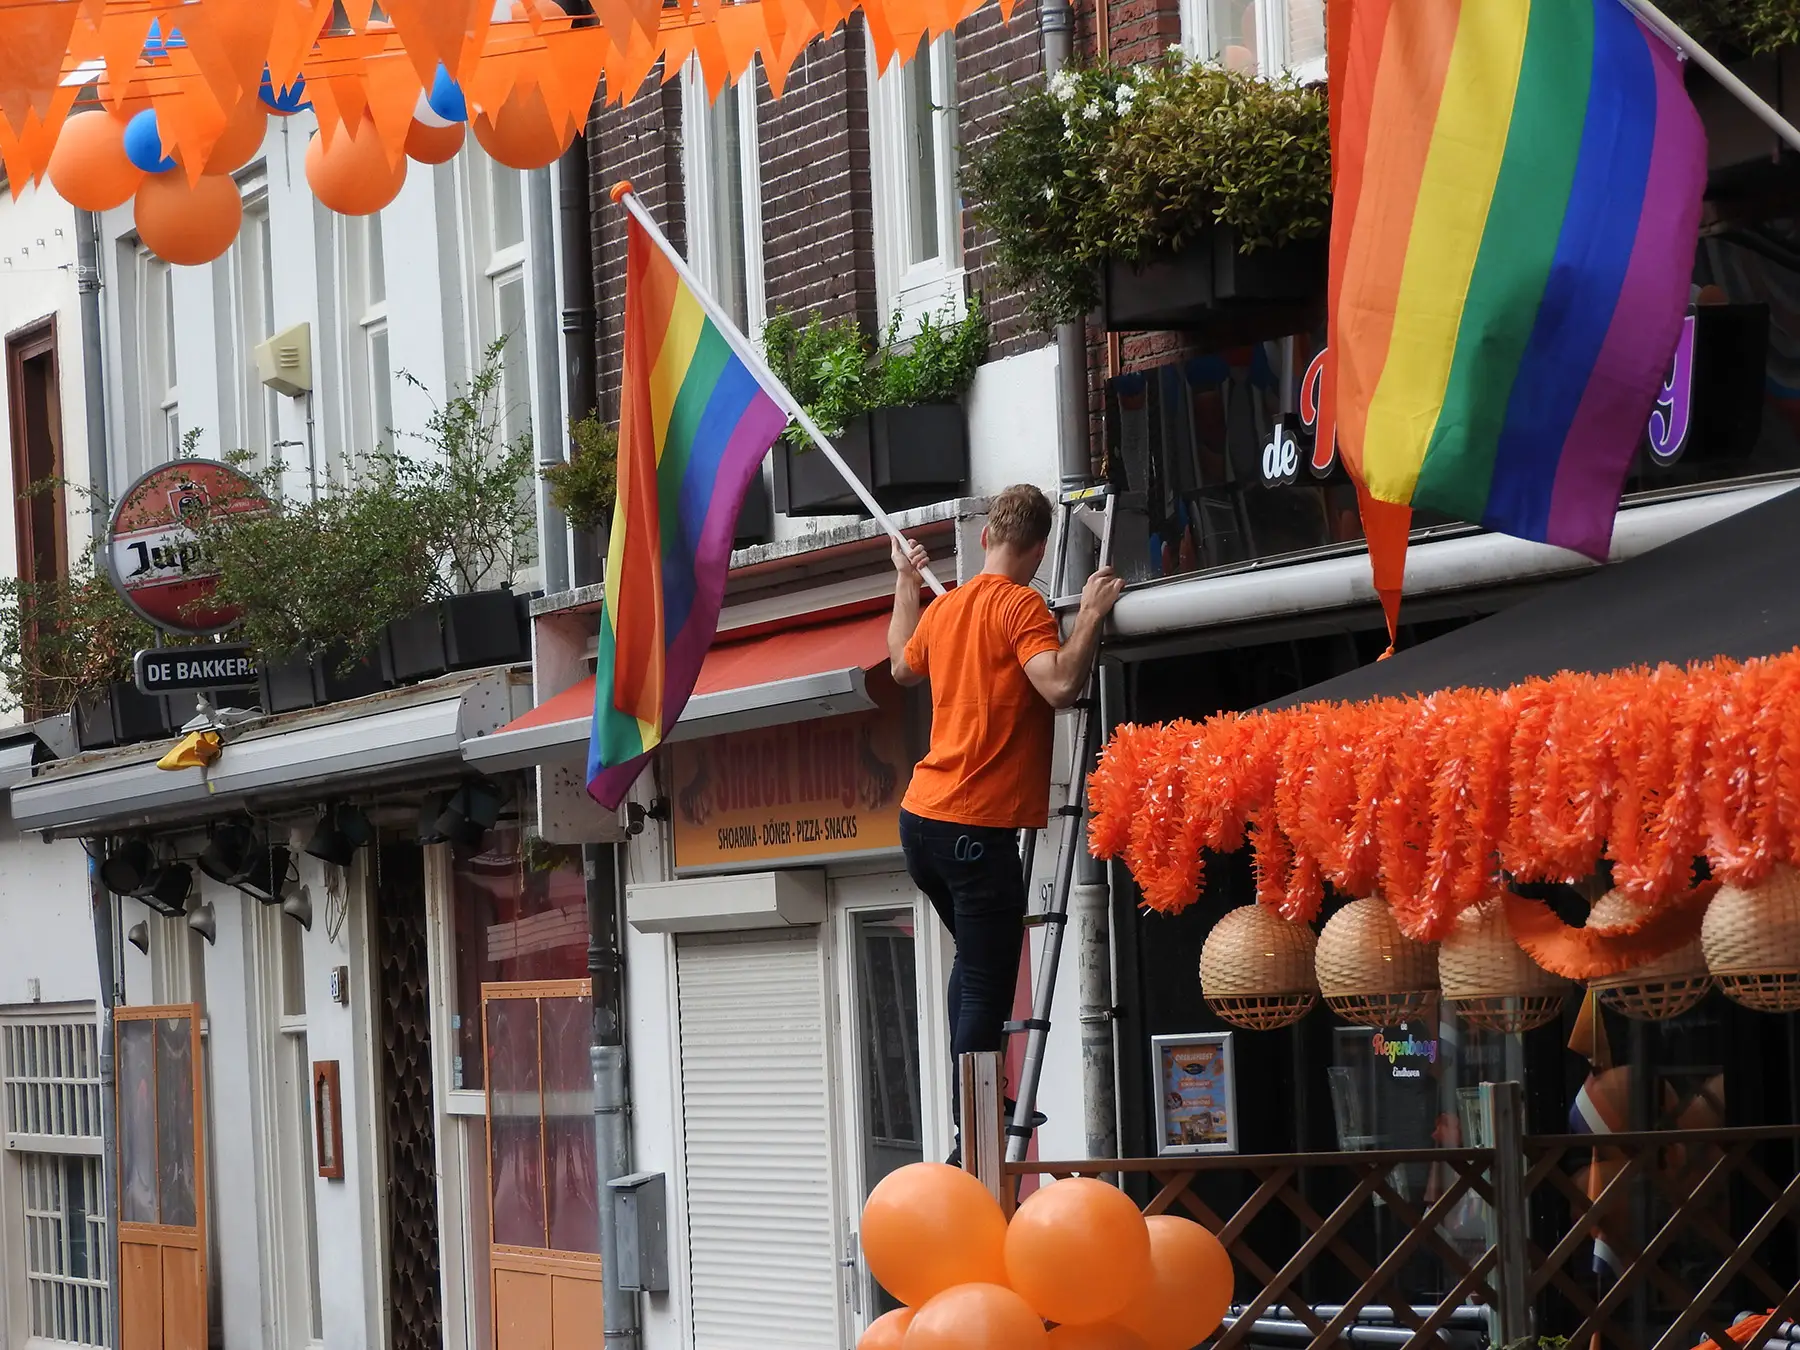 Eindhoven pride celebrations